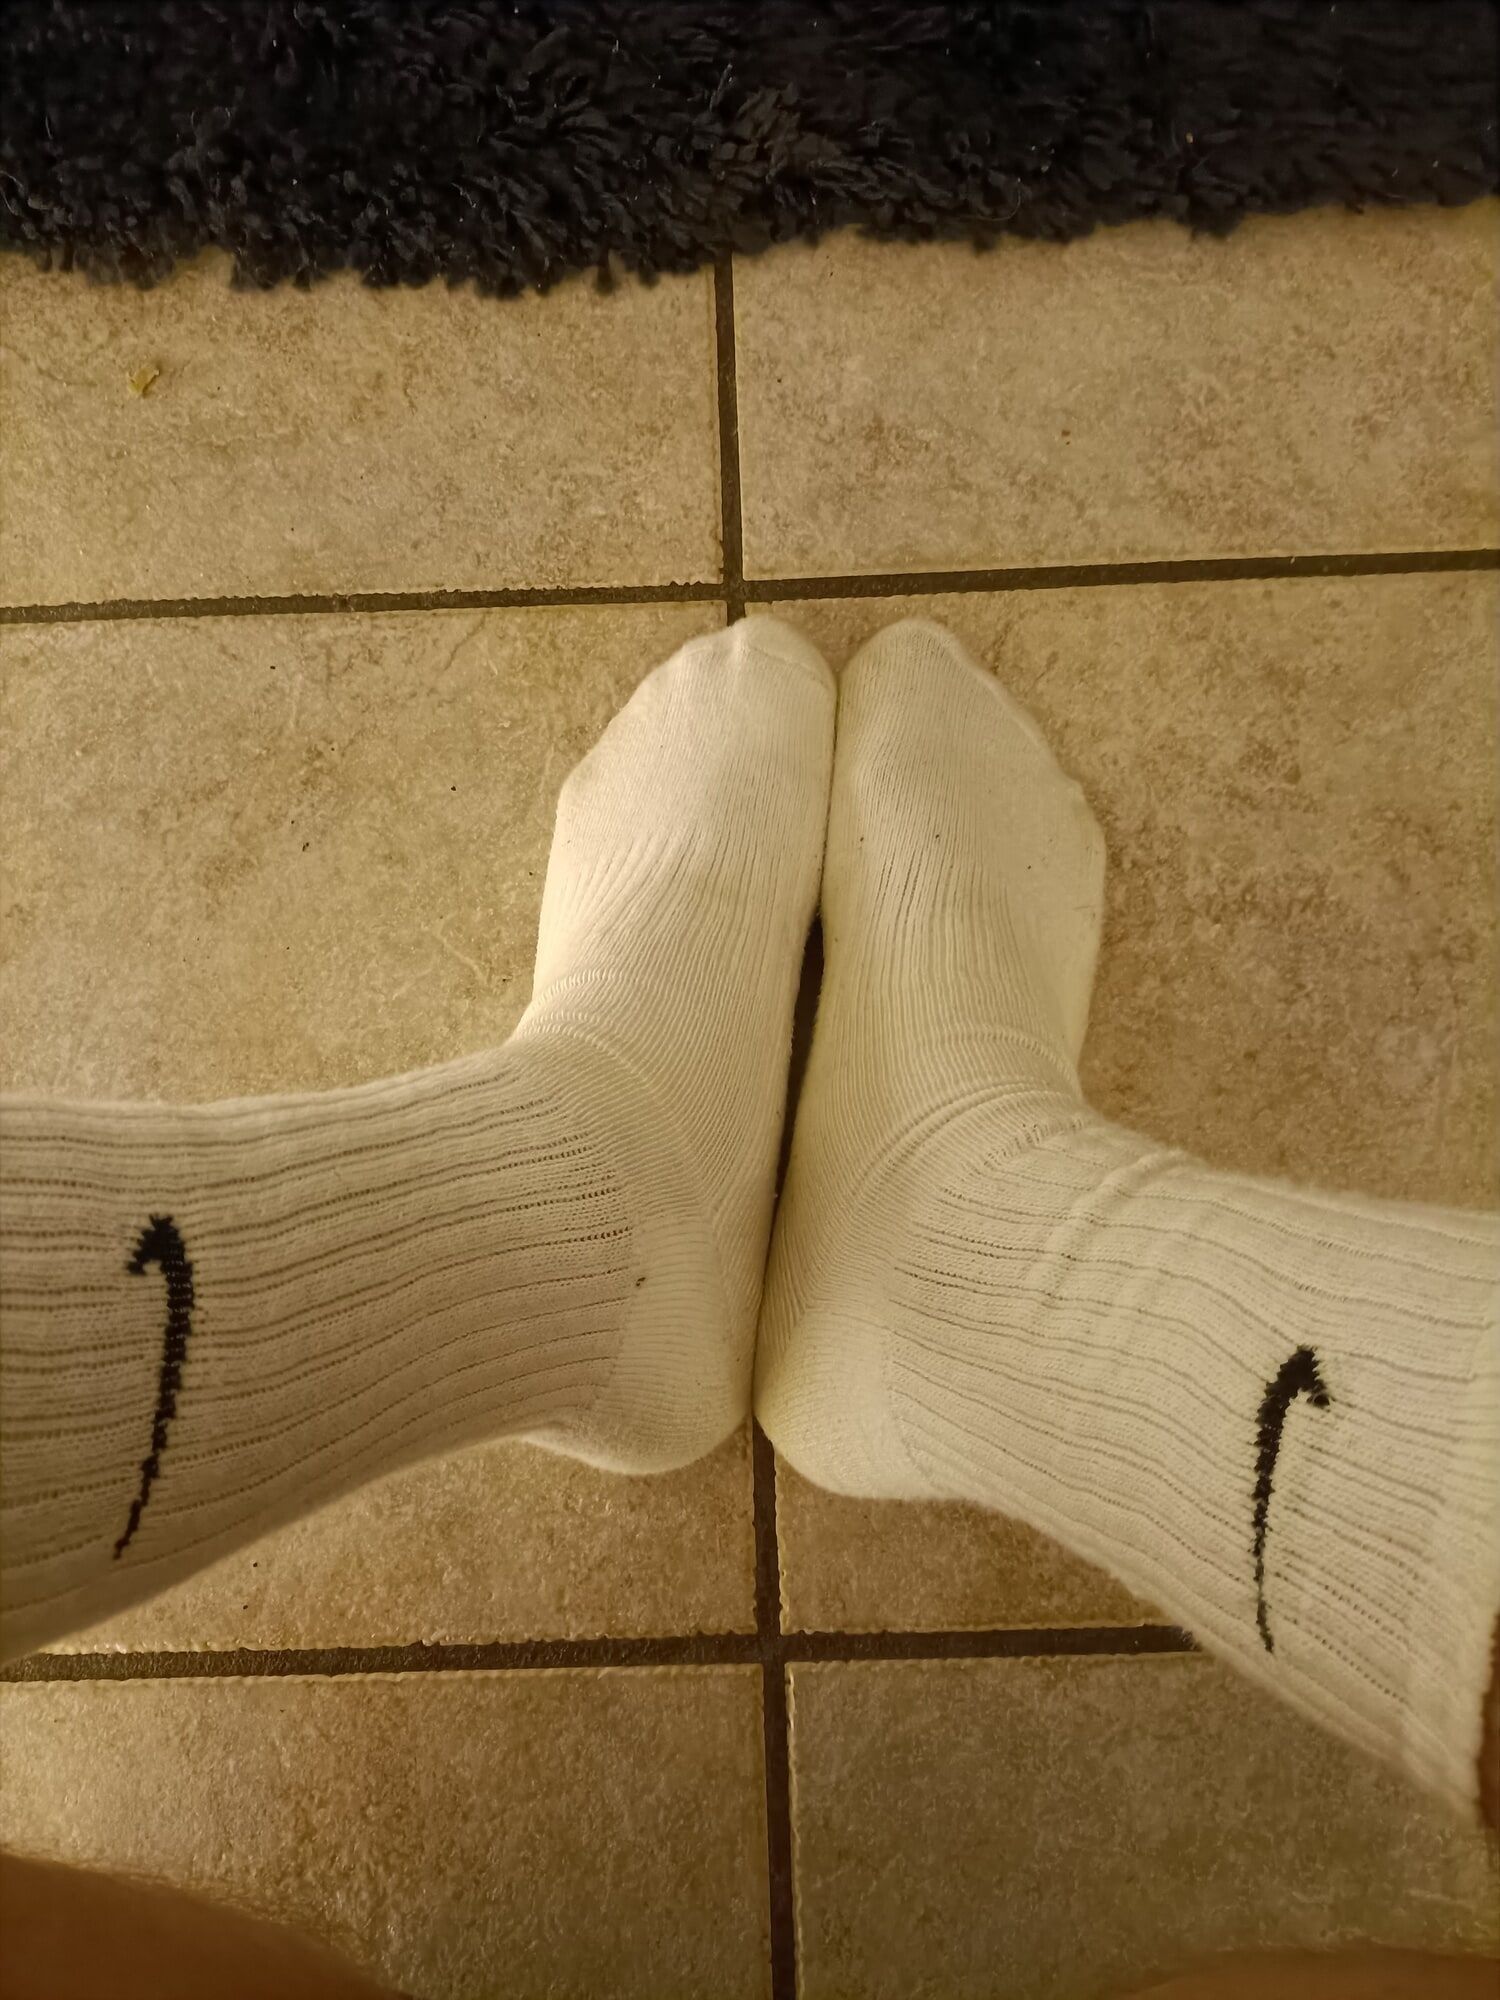 For feet and Socken Lovers 😜 #4